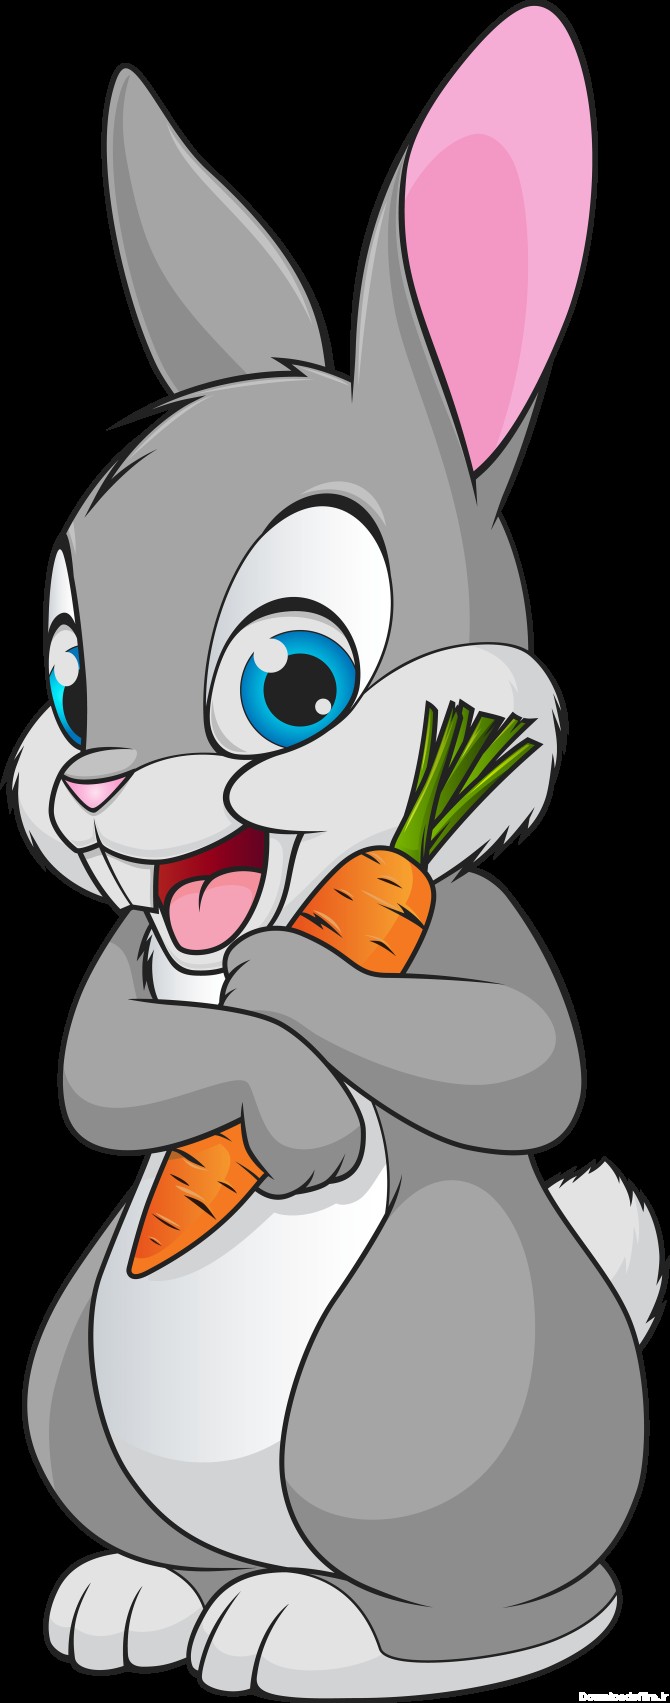 عکس PNG کارتونی خرگوش - Bunny PNG Cartoon – دانلود رایگان